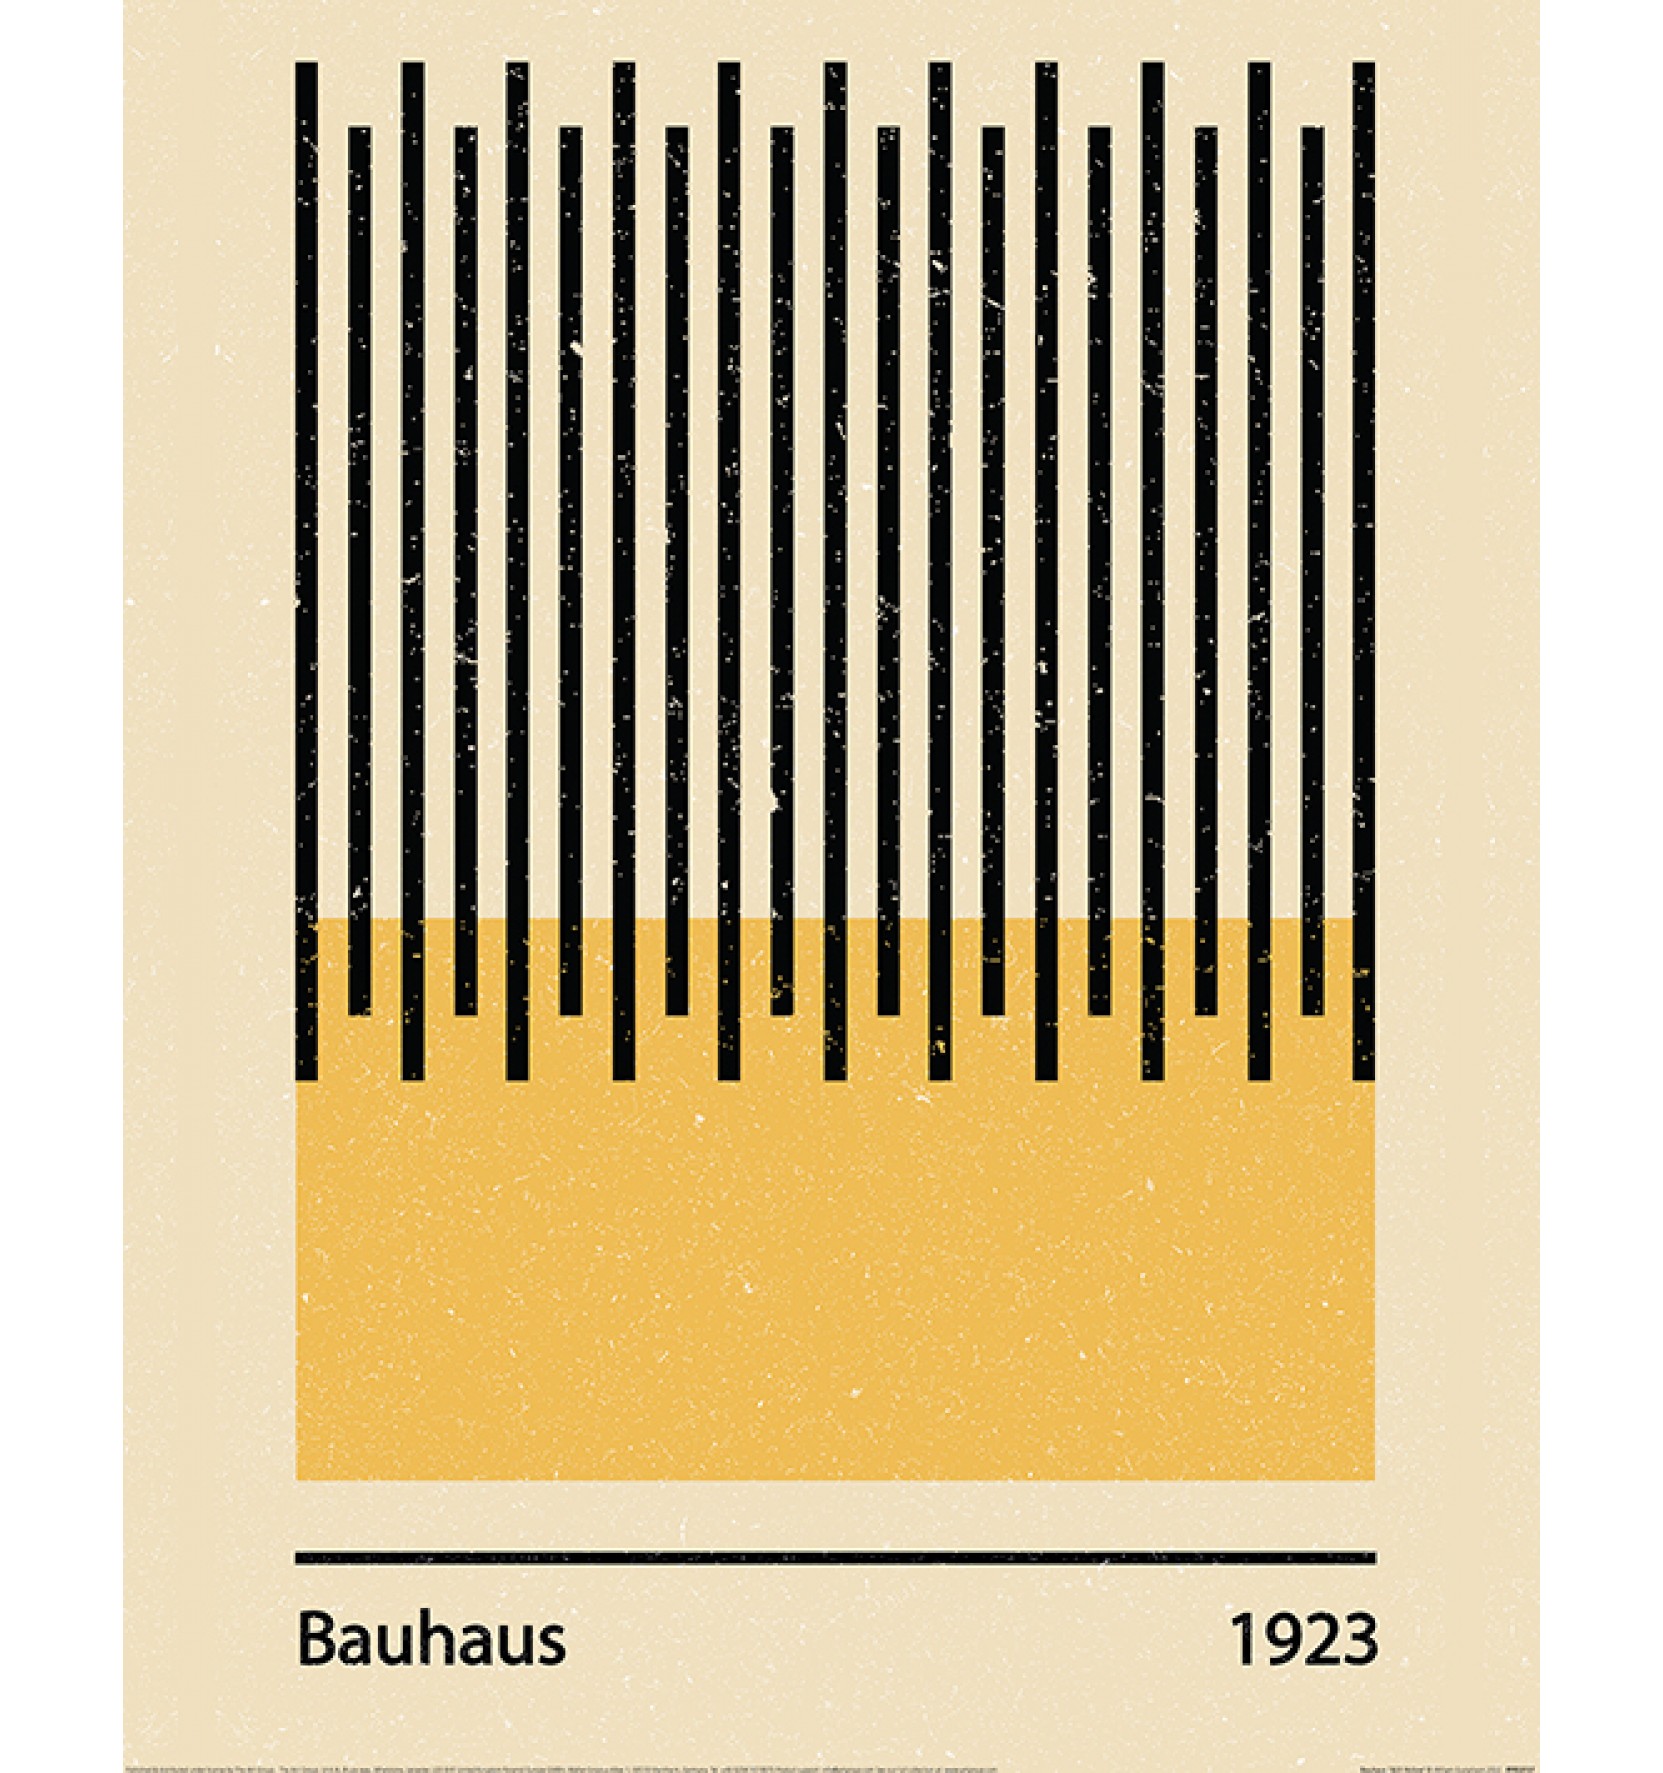 Bauhaus 1923 Yellow by William Gustafsson